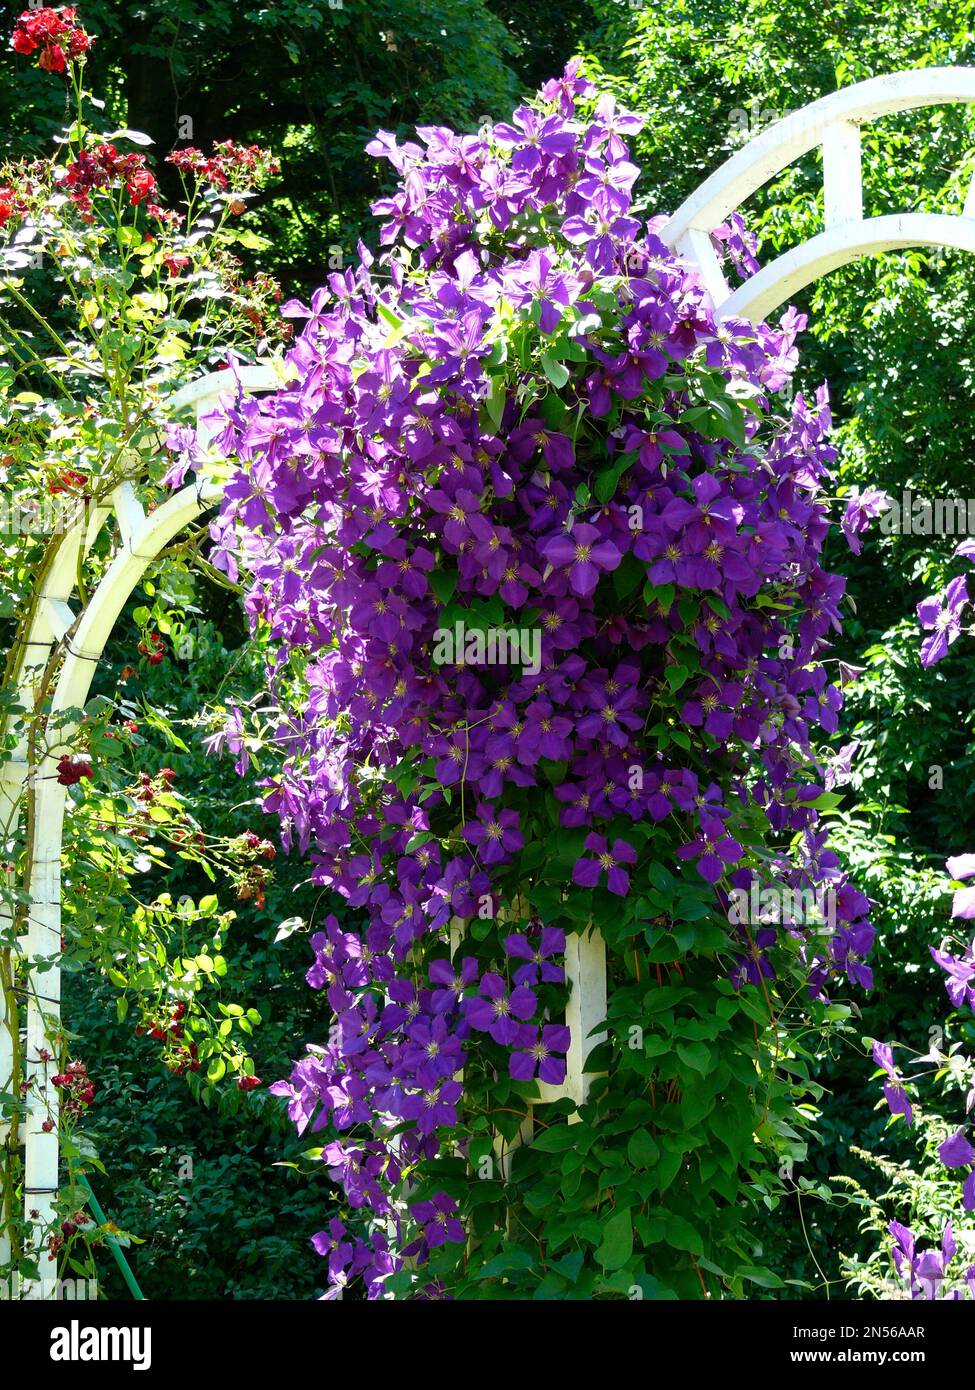 Clematis hybrid purple flowering, climbing arch, climbing aid Stock Photo